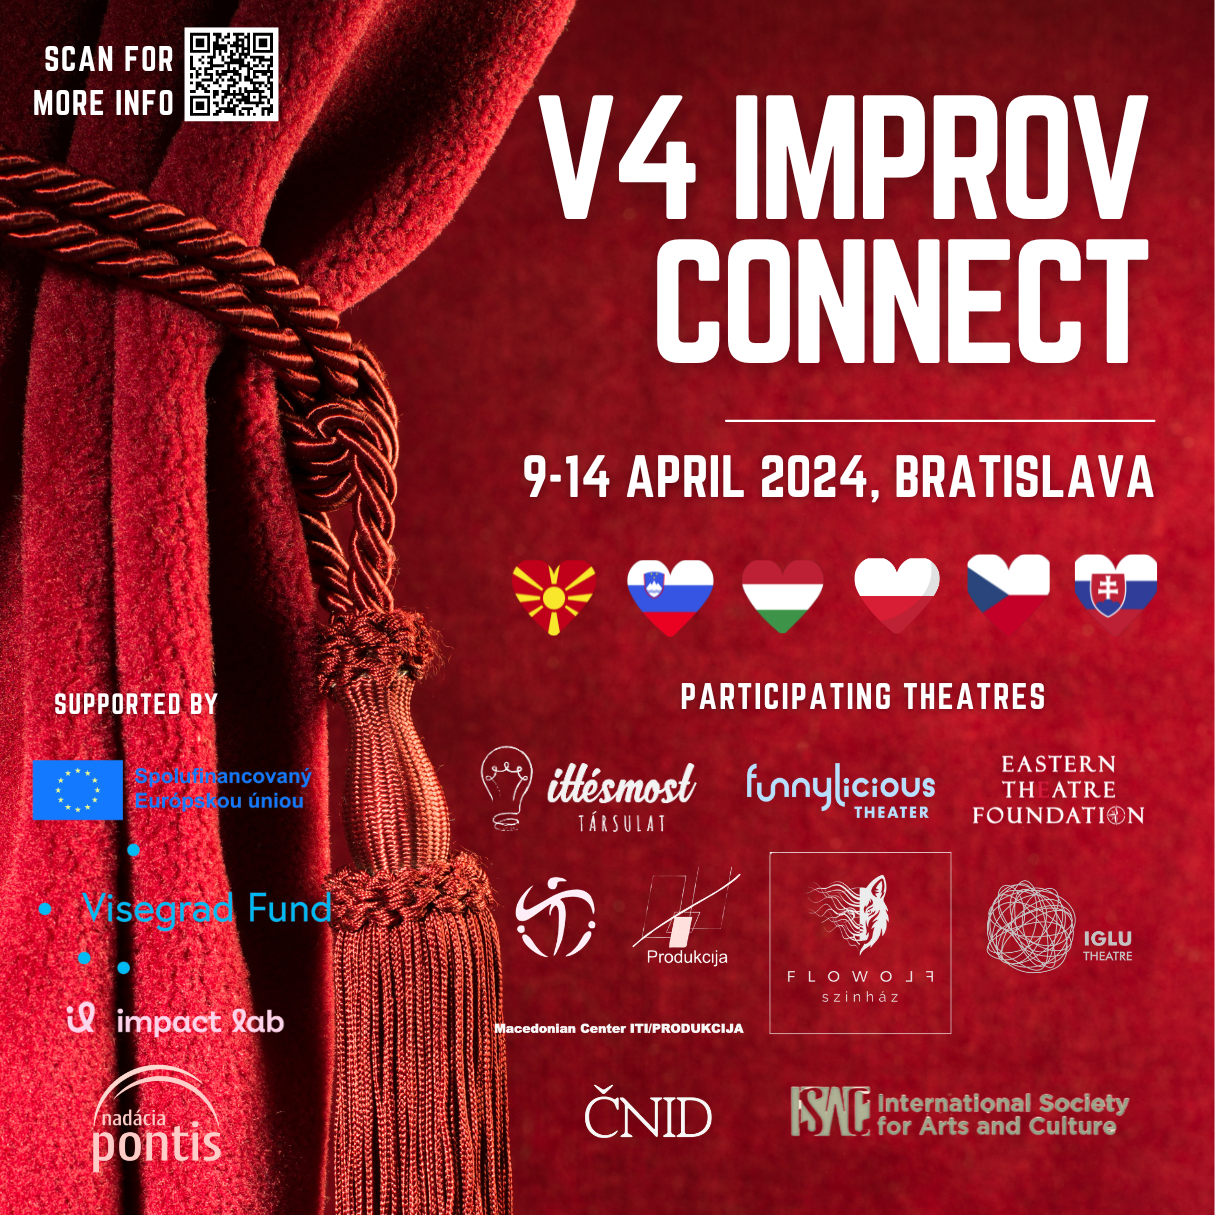 April 12, 2024: V4 Improv Connect: Friday Showcase